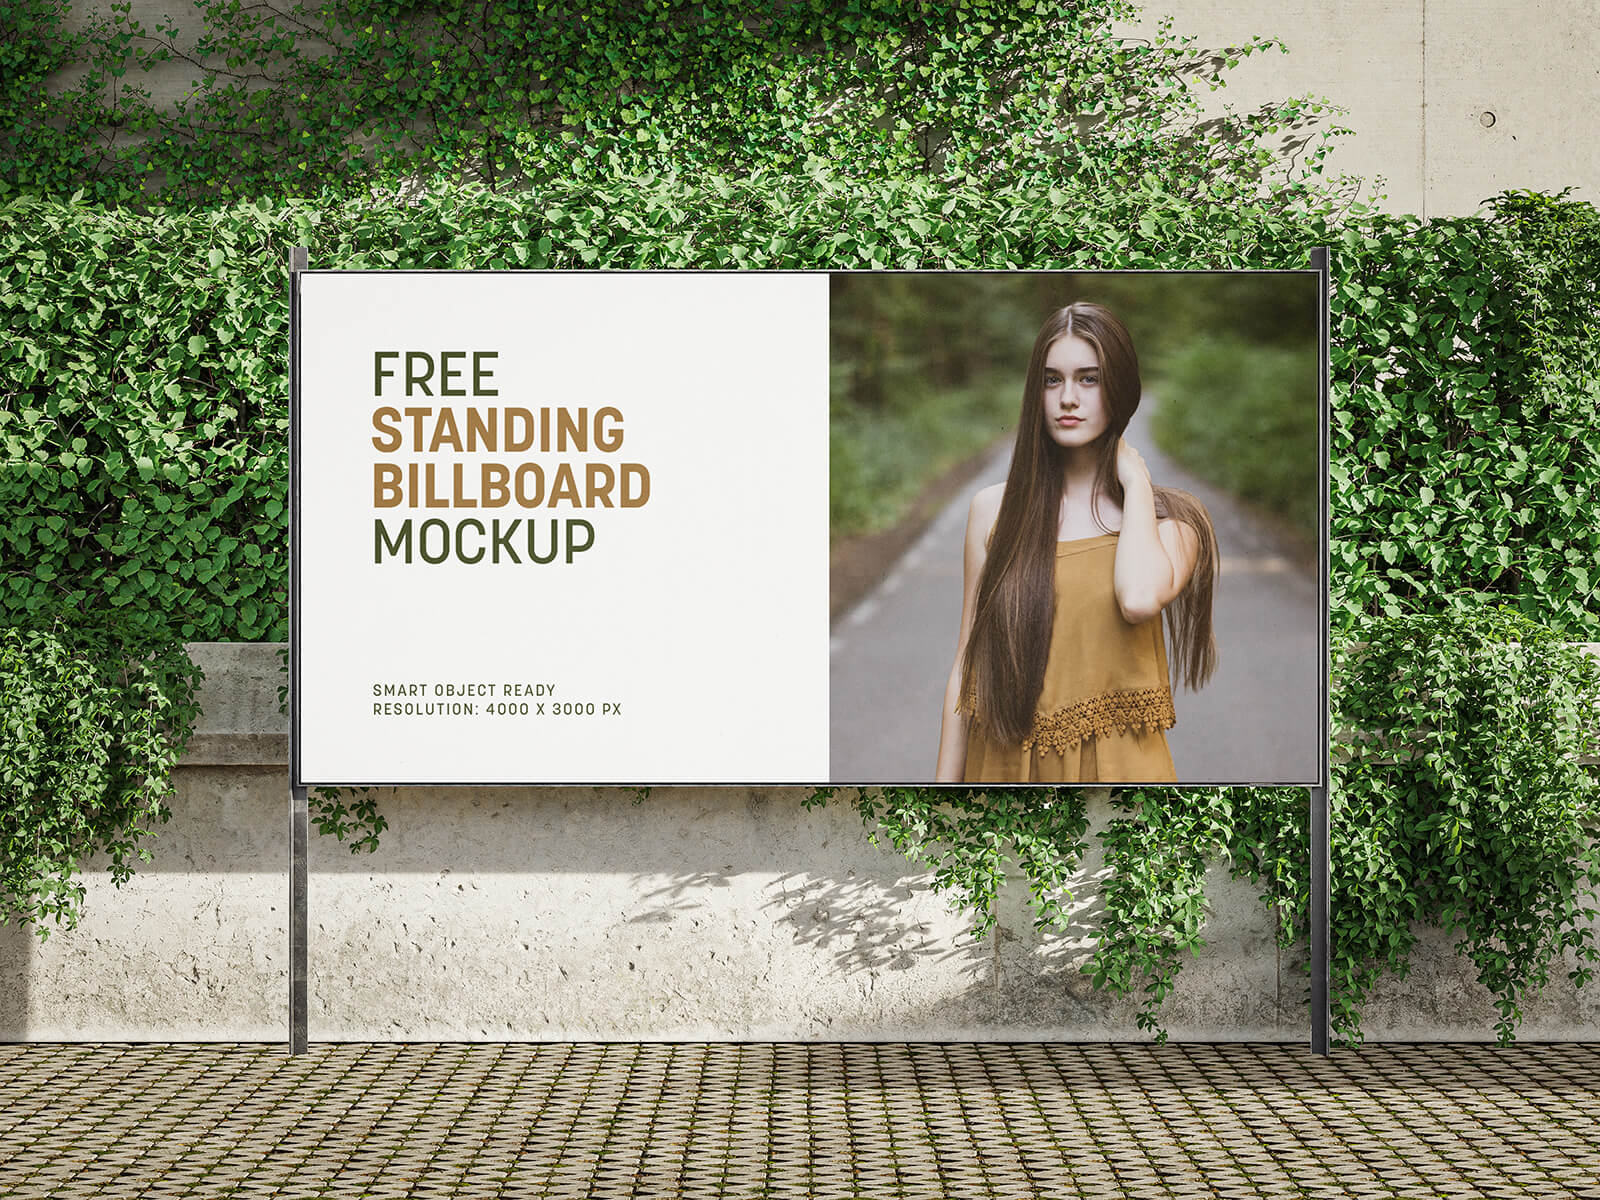 Free Standing Billboard Mockup PSD Set